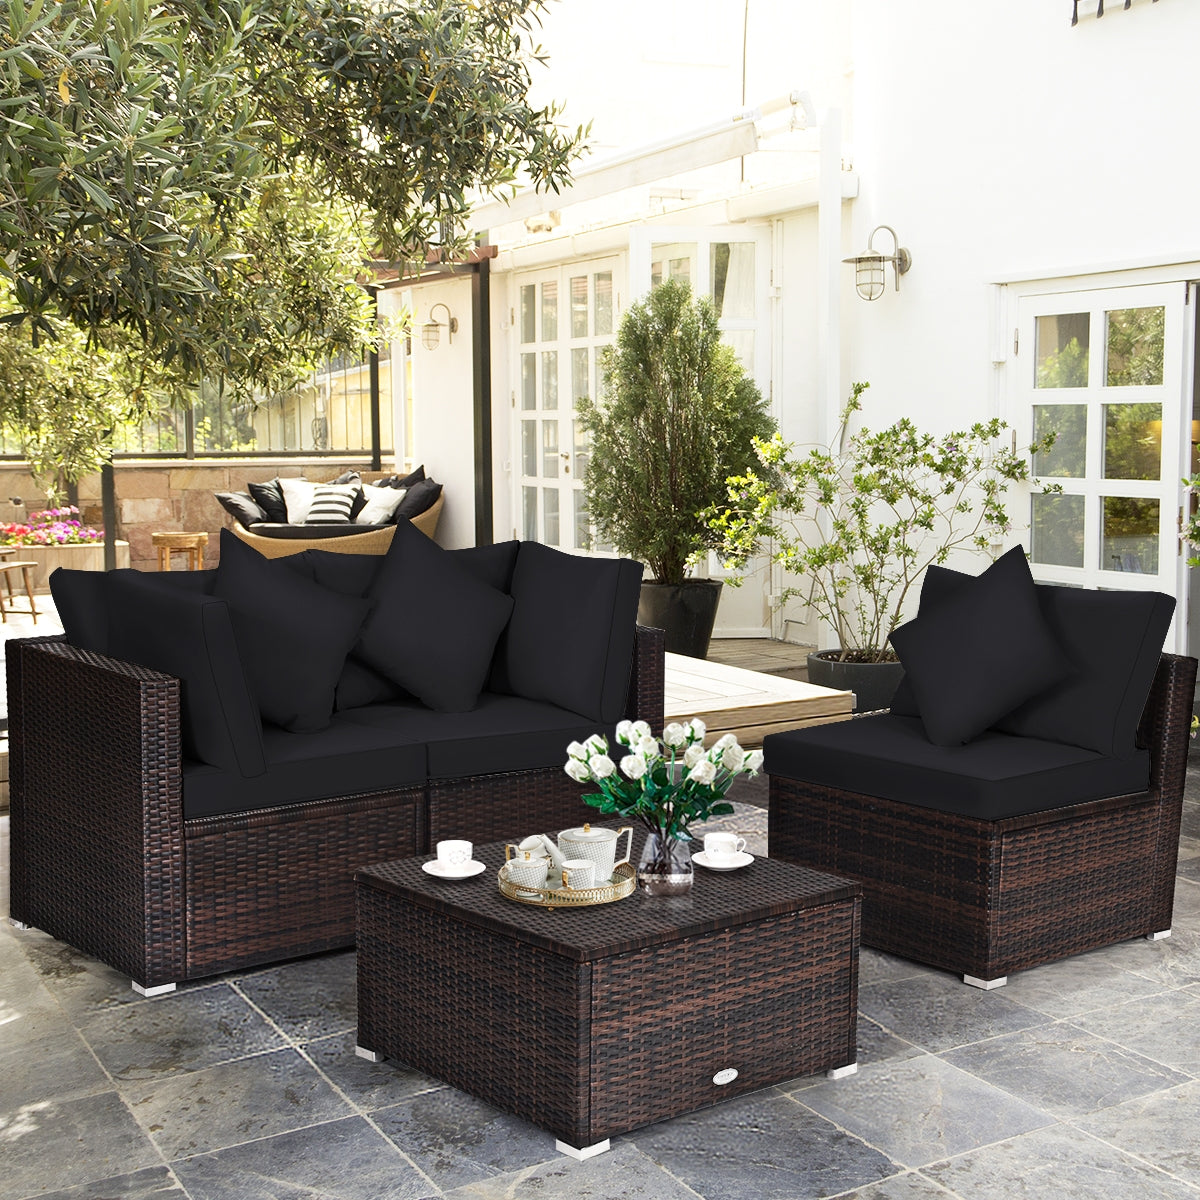 4 Pieces Ottoman Garden Patio Rattan Wicker Furniture Set with Cushion-Black